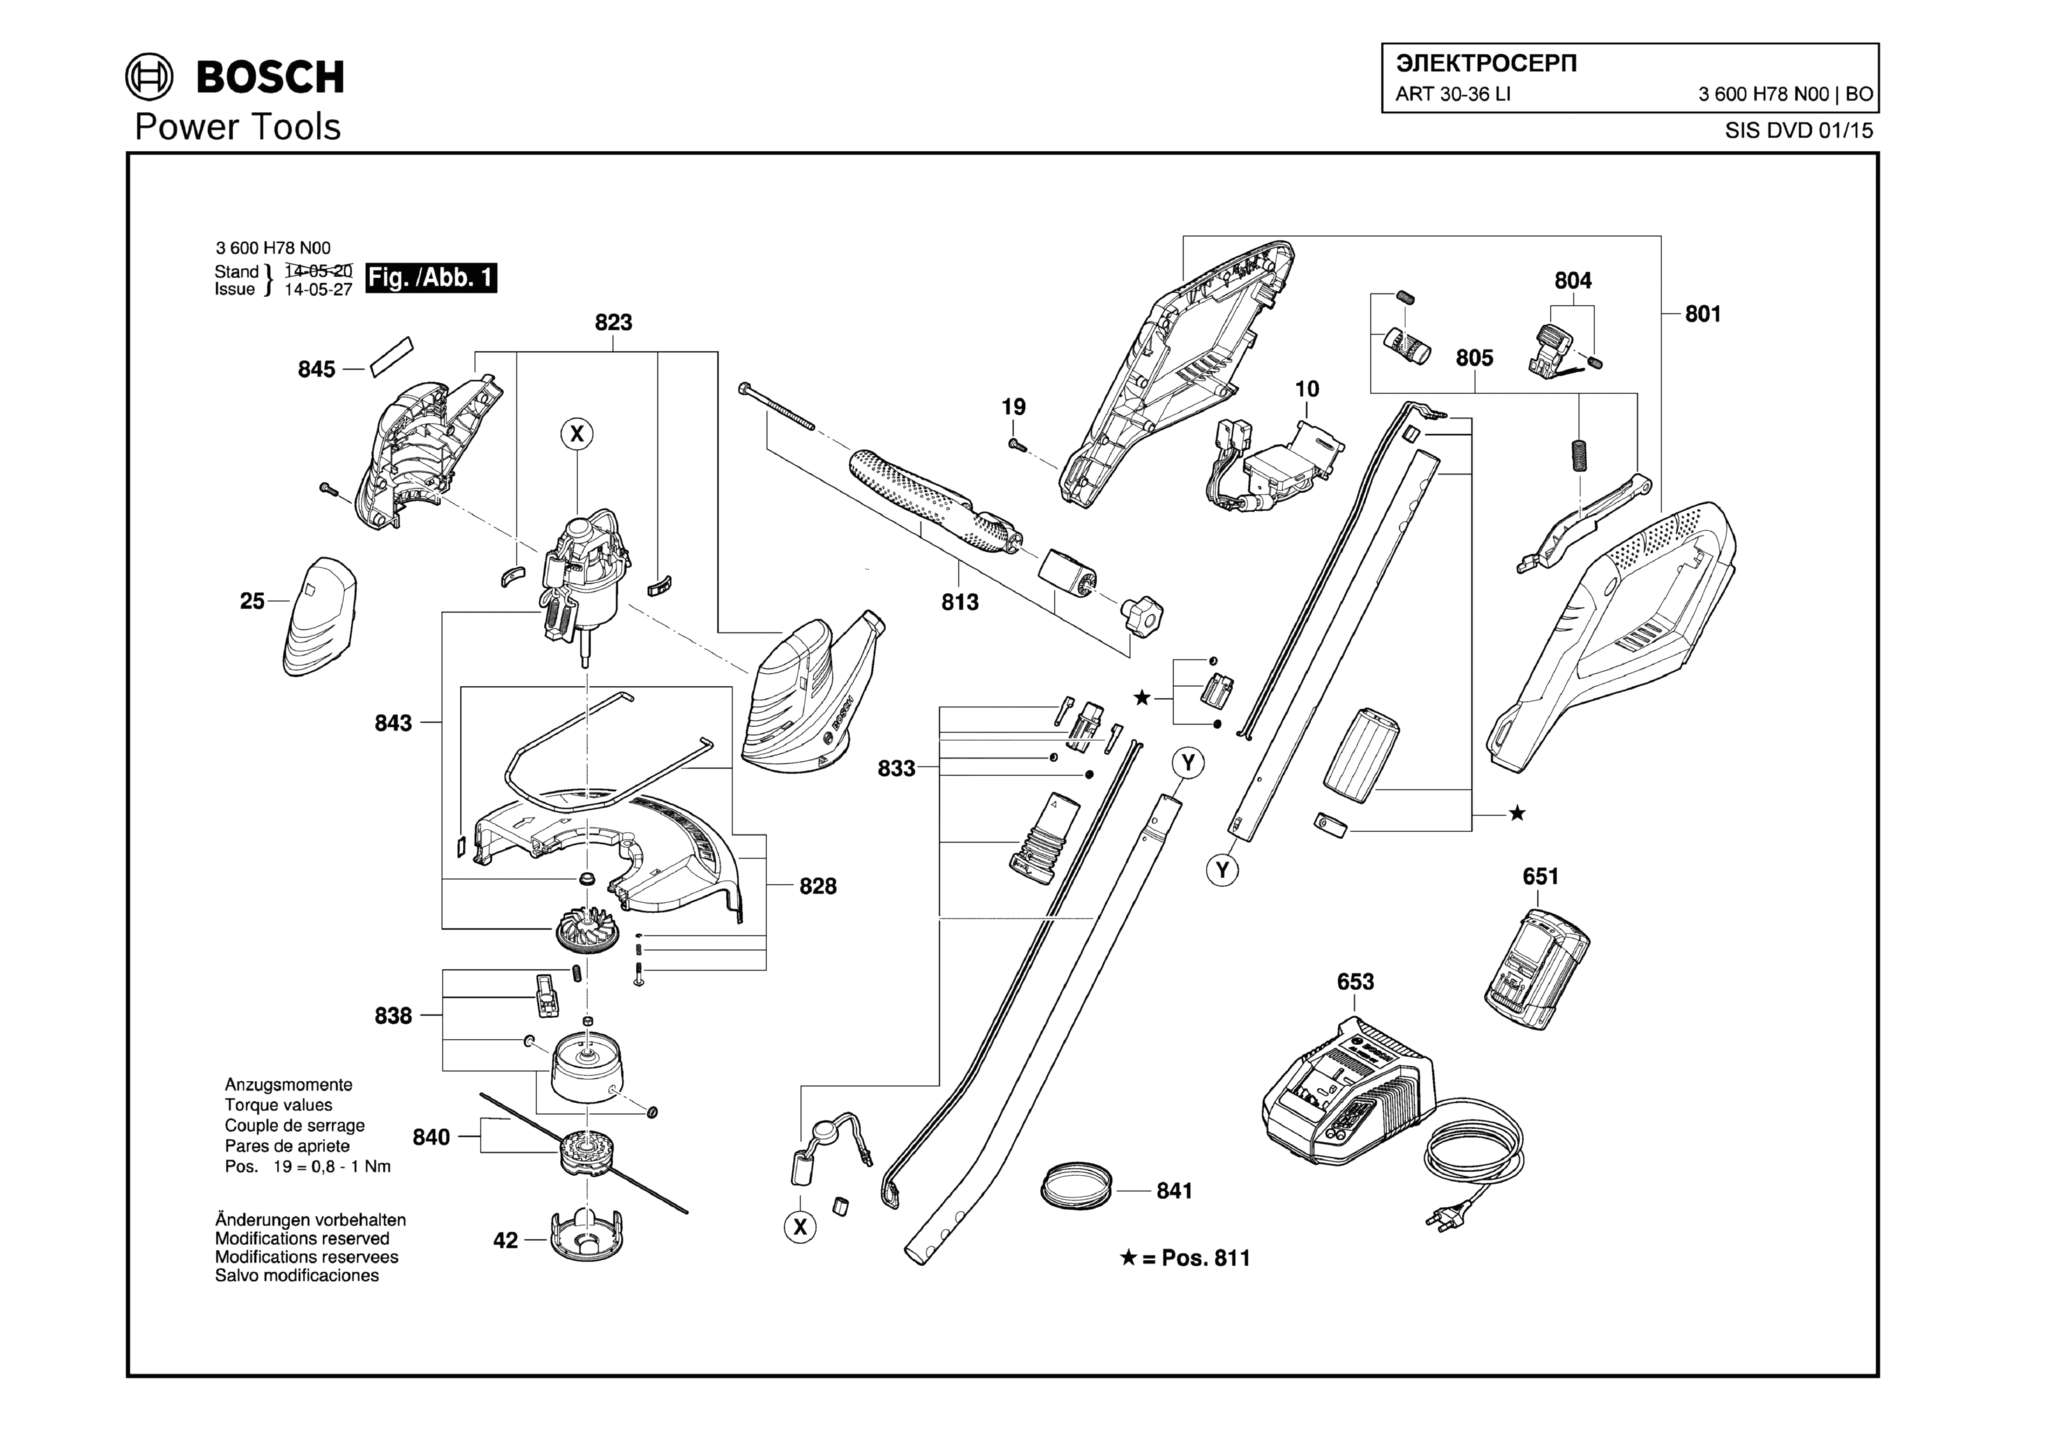 Запчасти, схема и деталировка Bosch ART 30-36 LI (ТИП 3600H78N00)